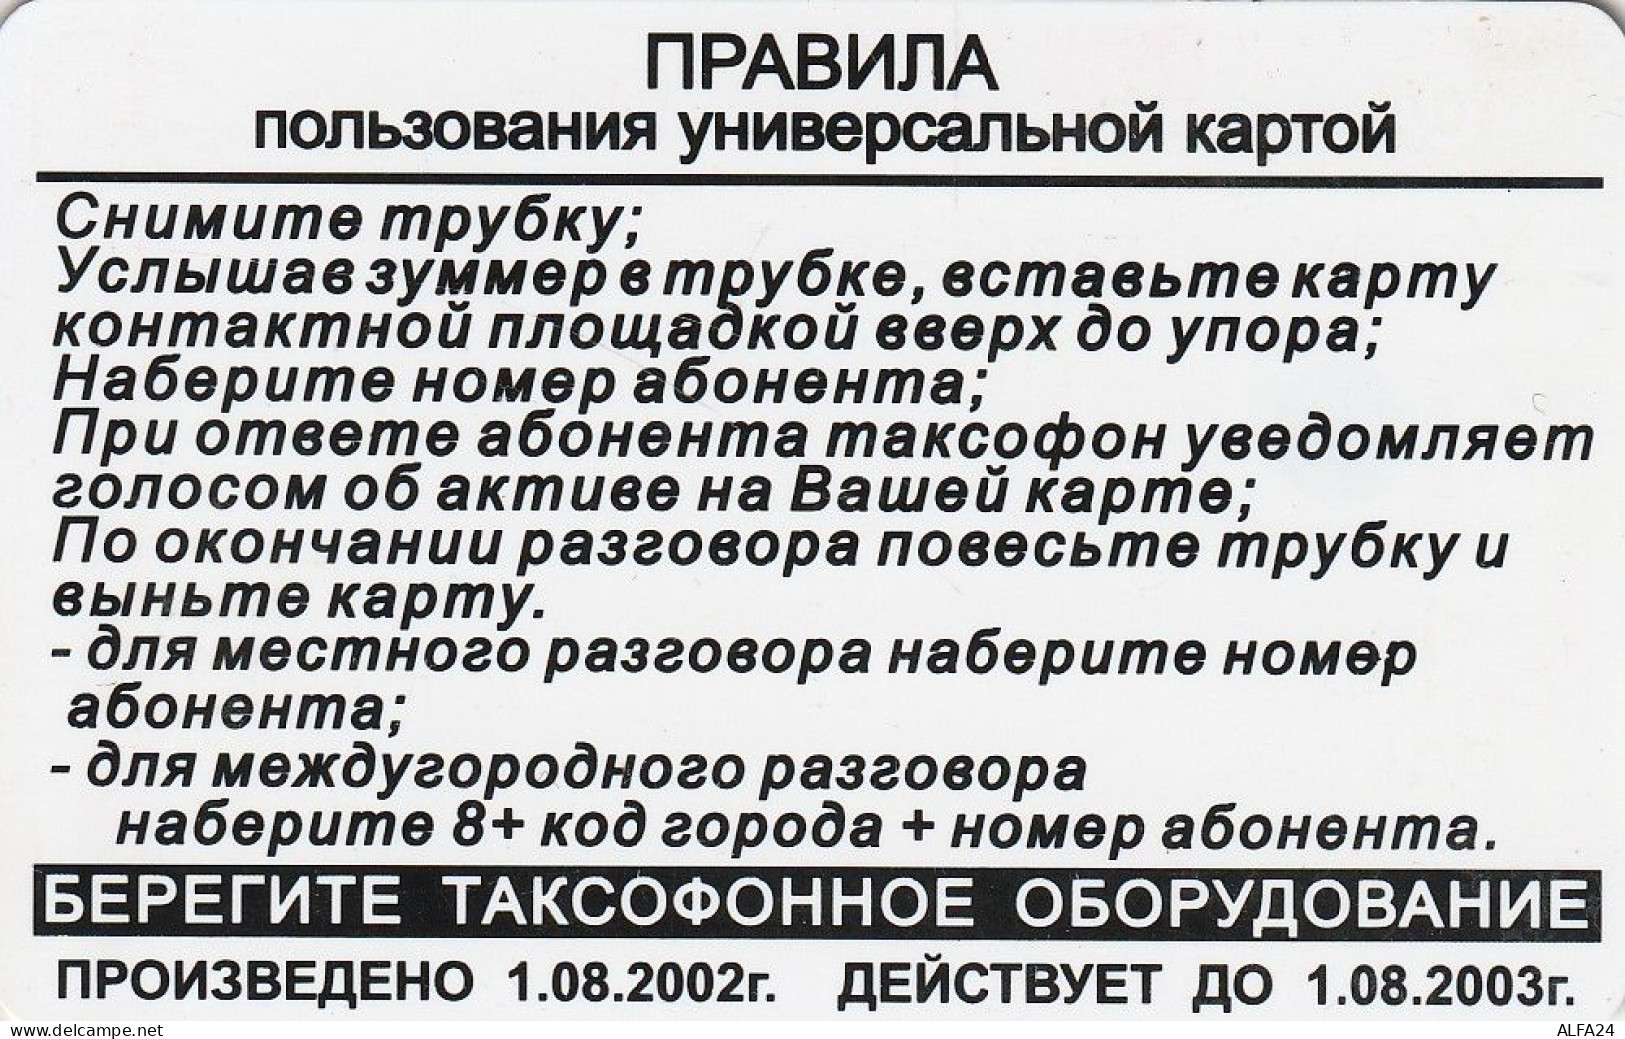 PHONE CARD RUSSIA Svyazinform + VolgaTelecom, Saransk, Mordovia (RUS78.6 - Russia